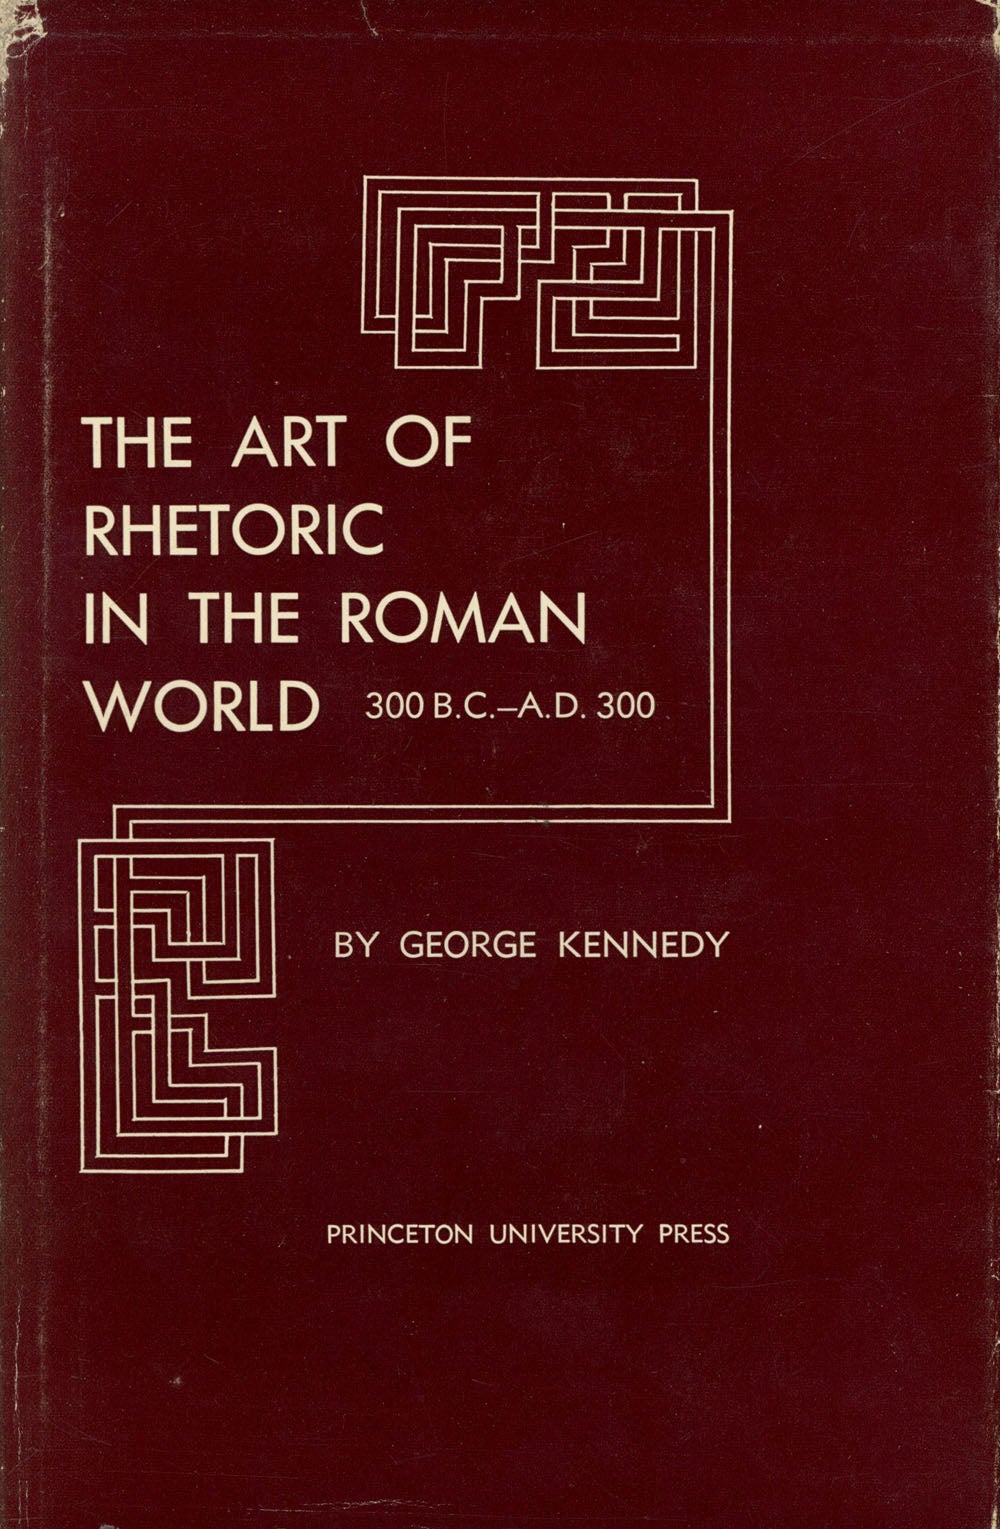 Kennedy vol 2 cover